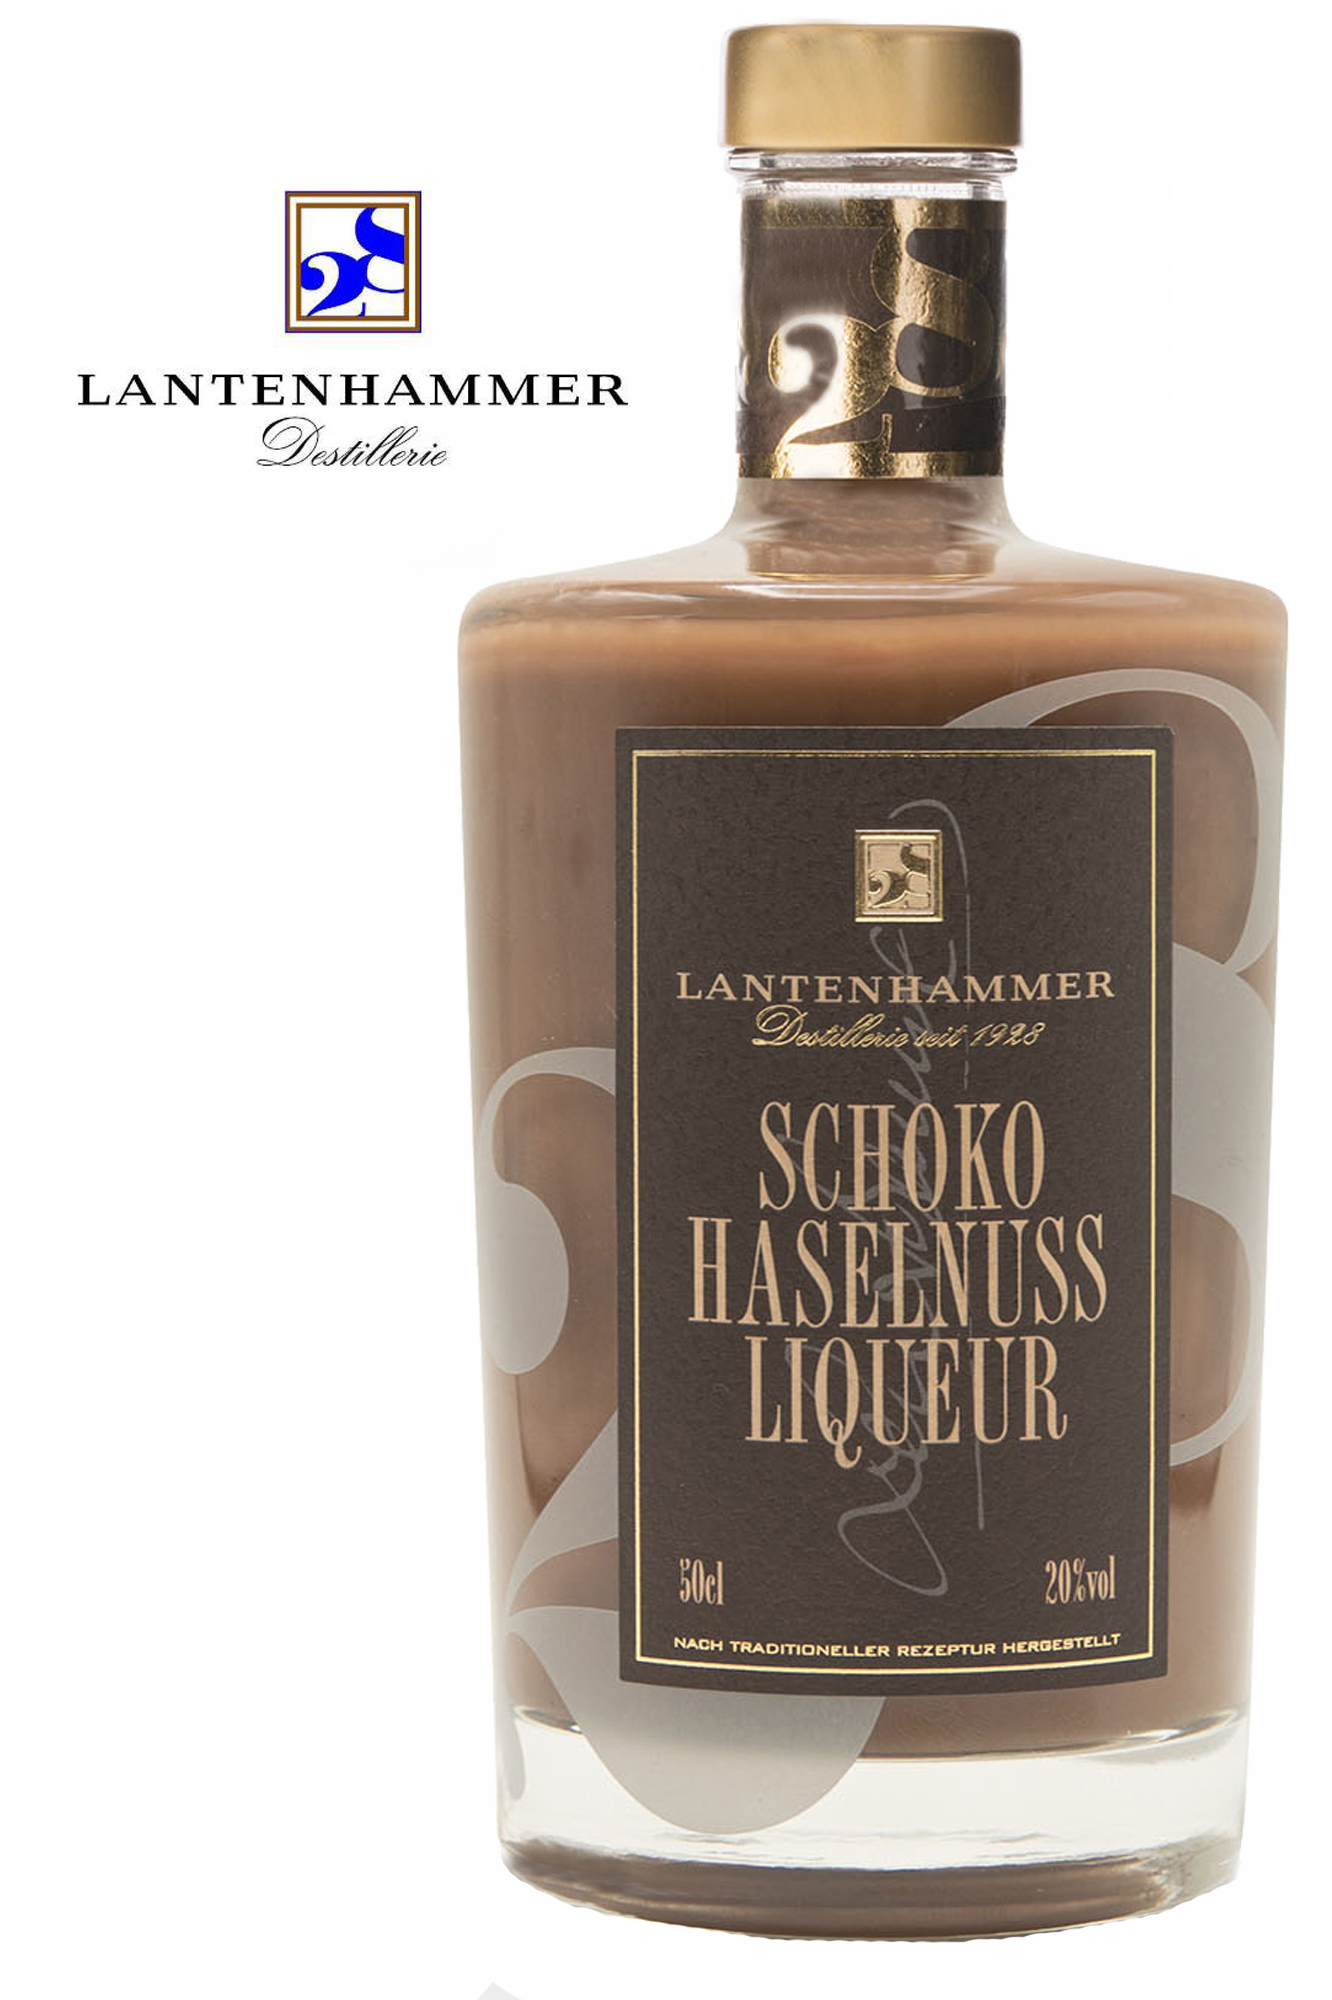 Lantenhammer Schoko-Haselnuss Likör - Vodka Haus